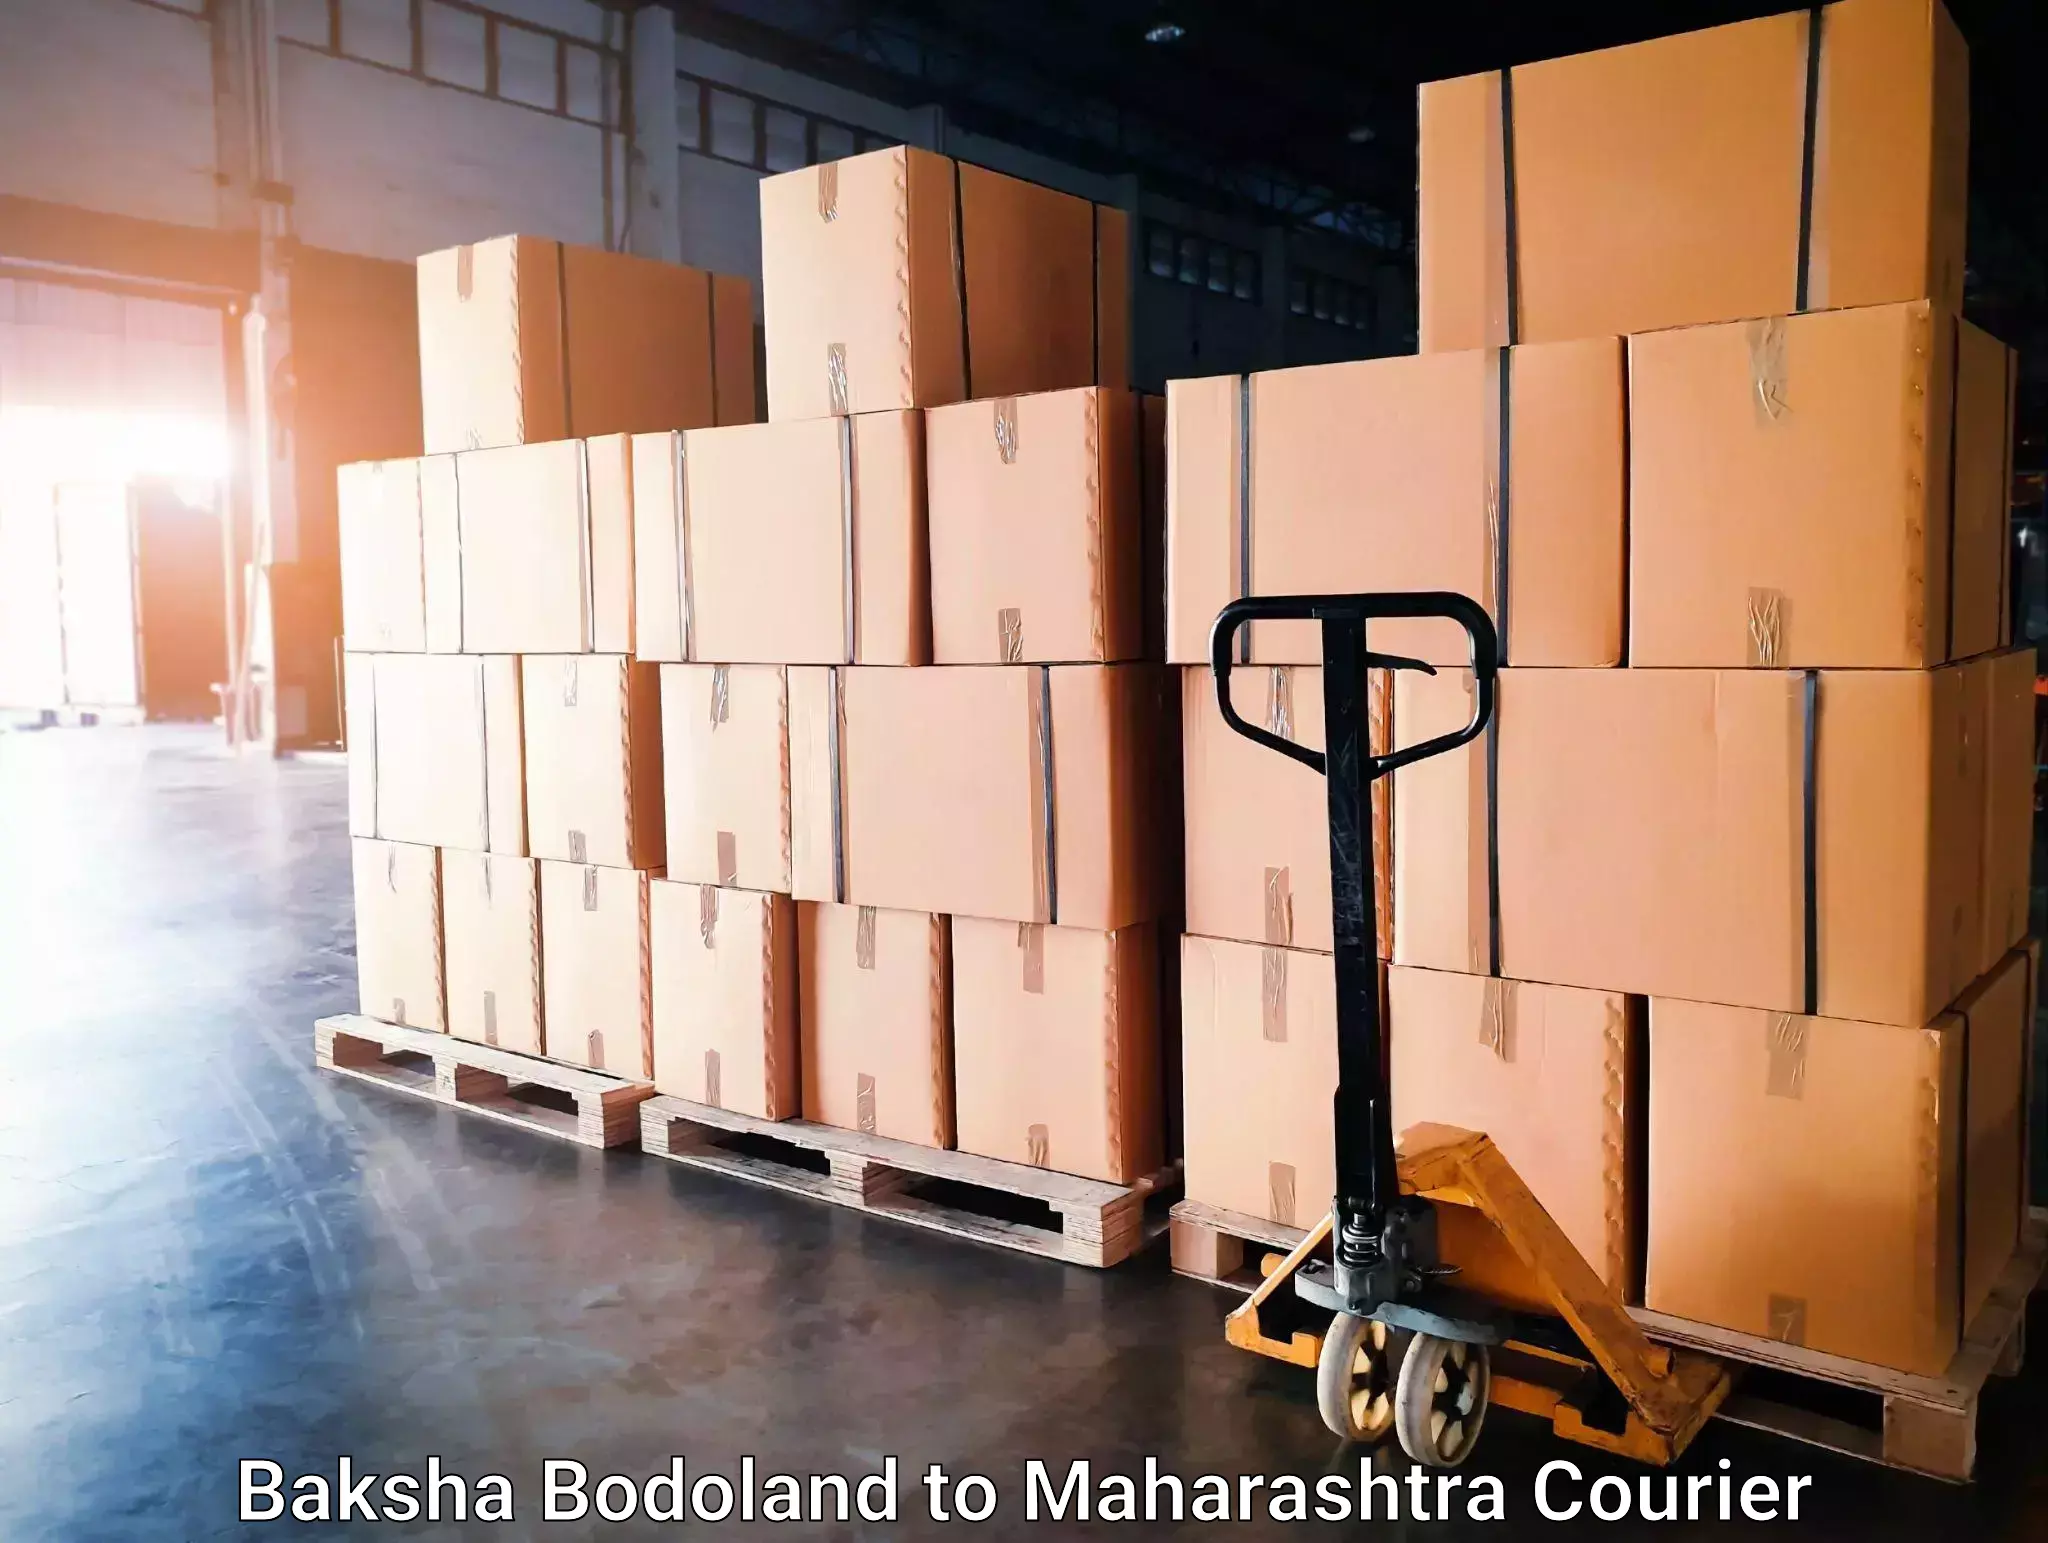 Courier service innovation Baksha Bodoland to Yavatmal